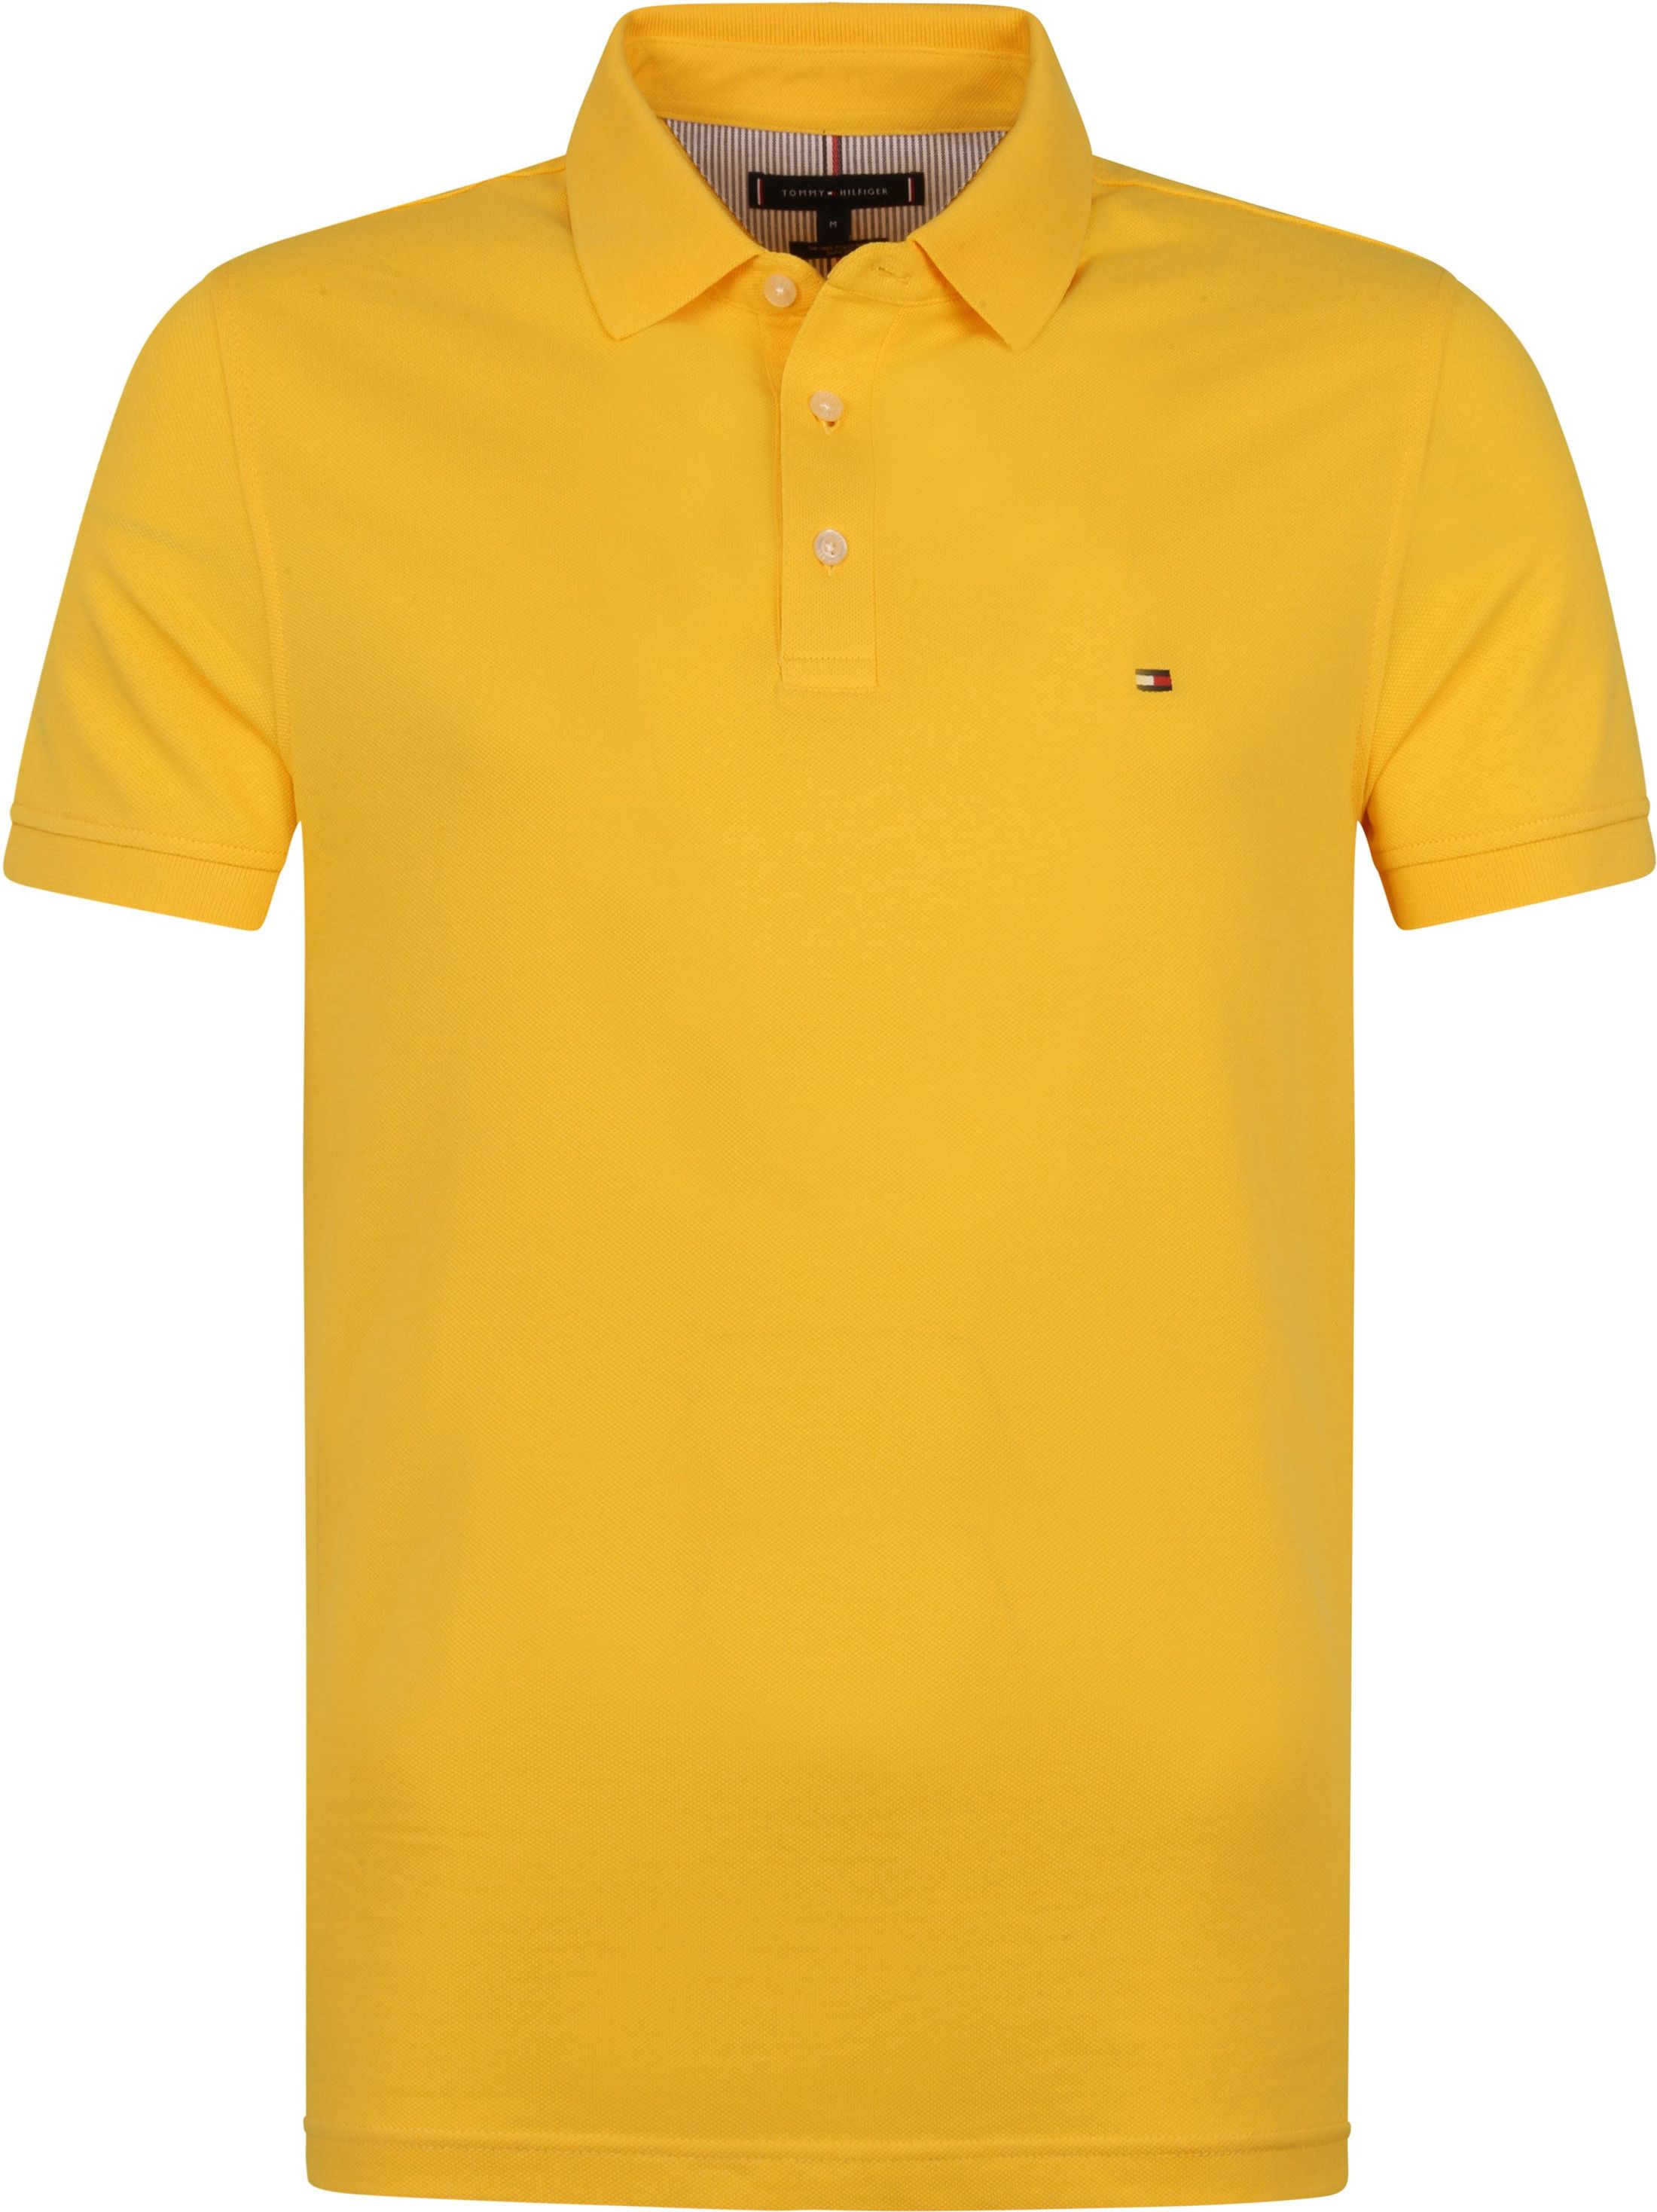 Tommy Hilfiger Polo Shirt 1985 Yellow size 3XL